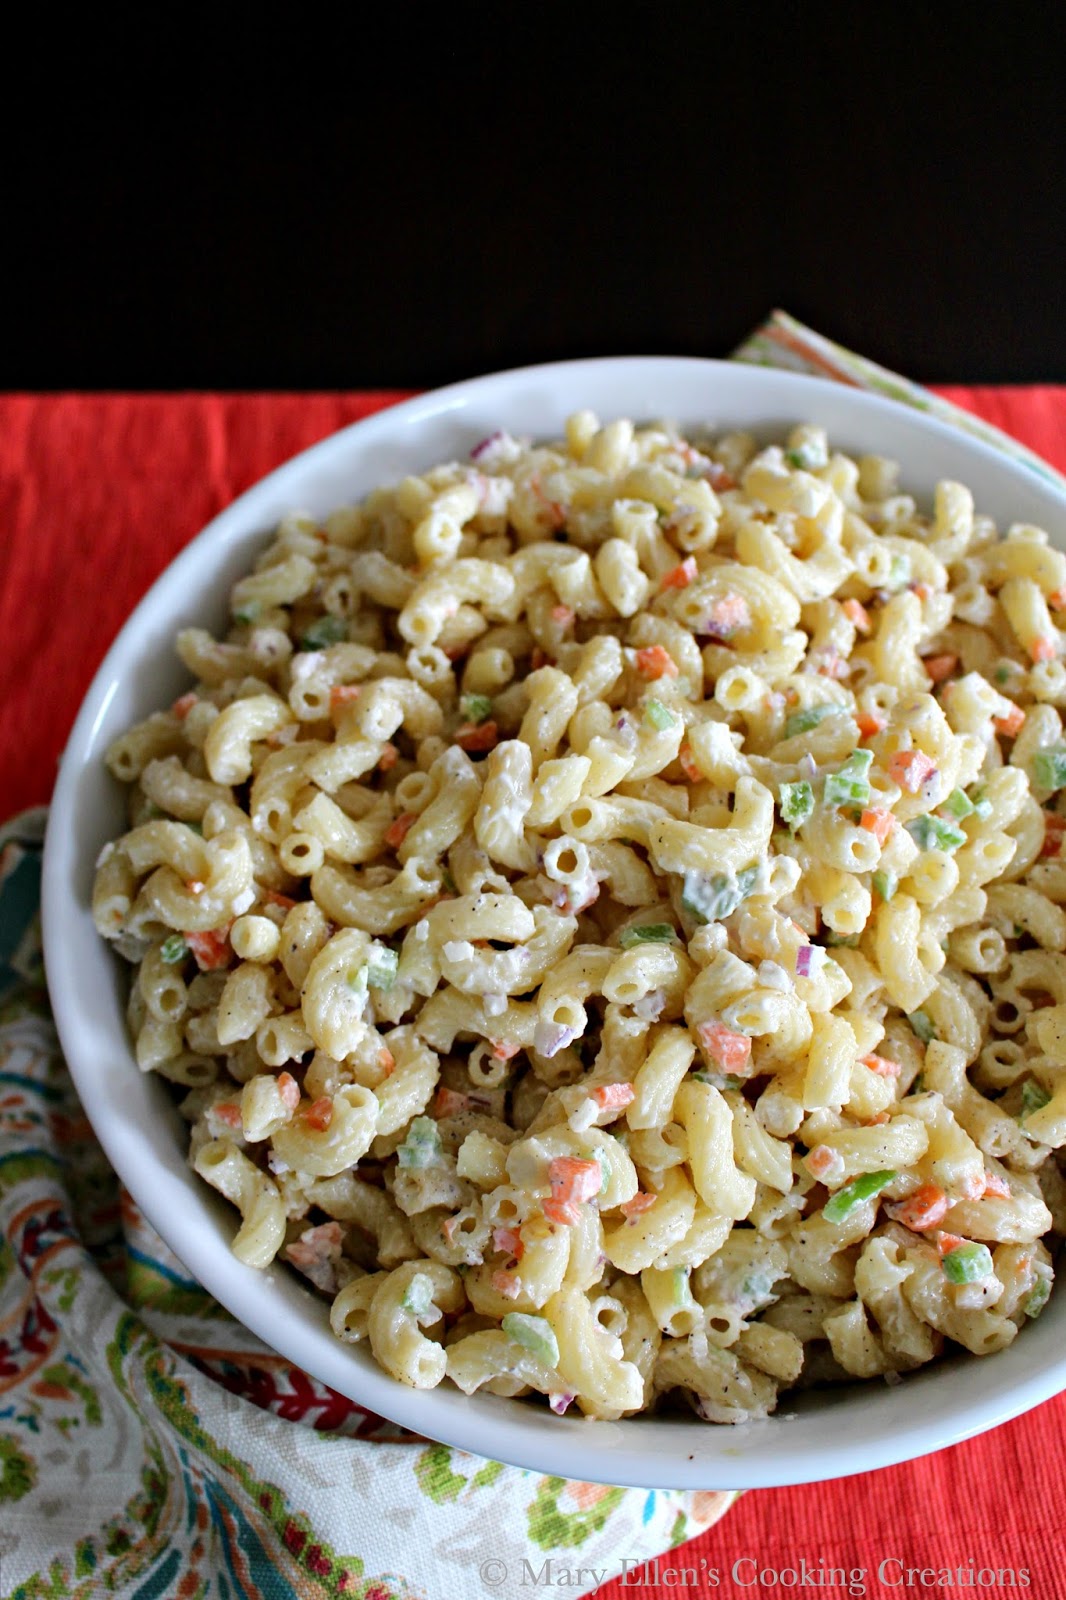 Mary Ellen's Cooking Creations: Grandmom's Macaroni Salad